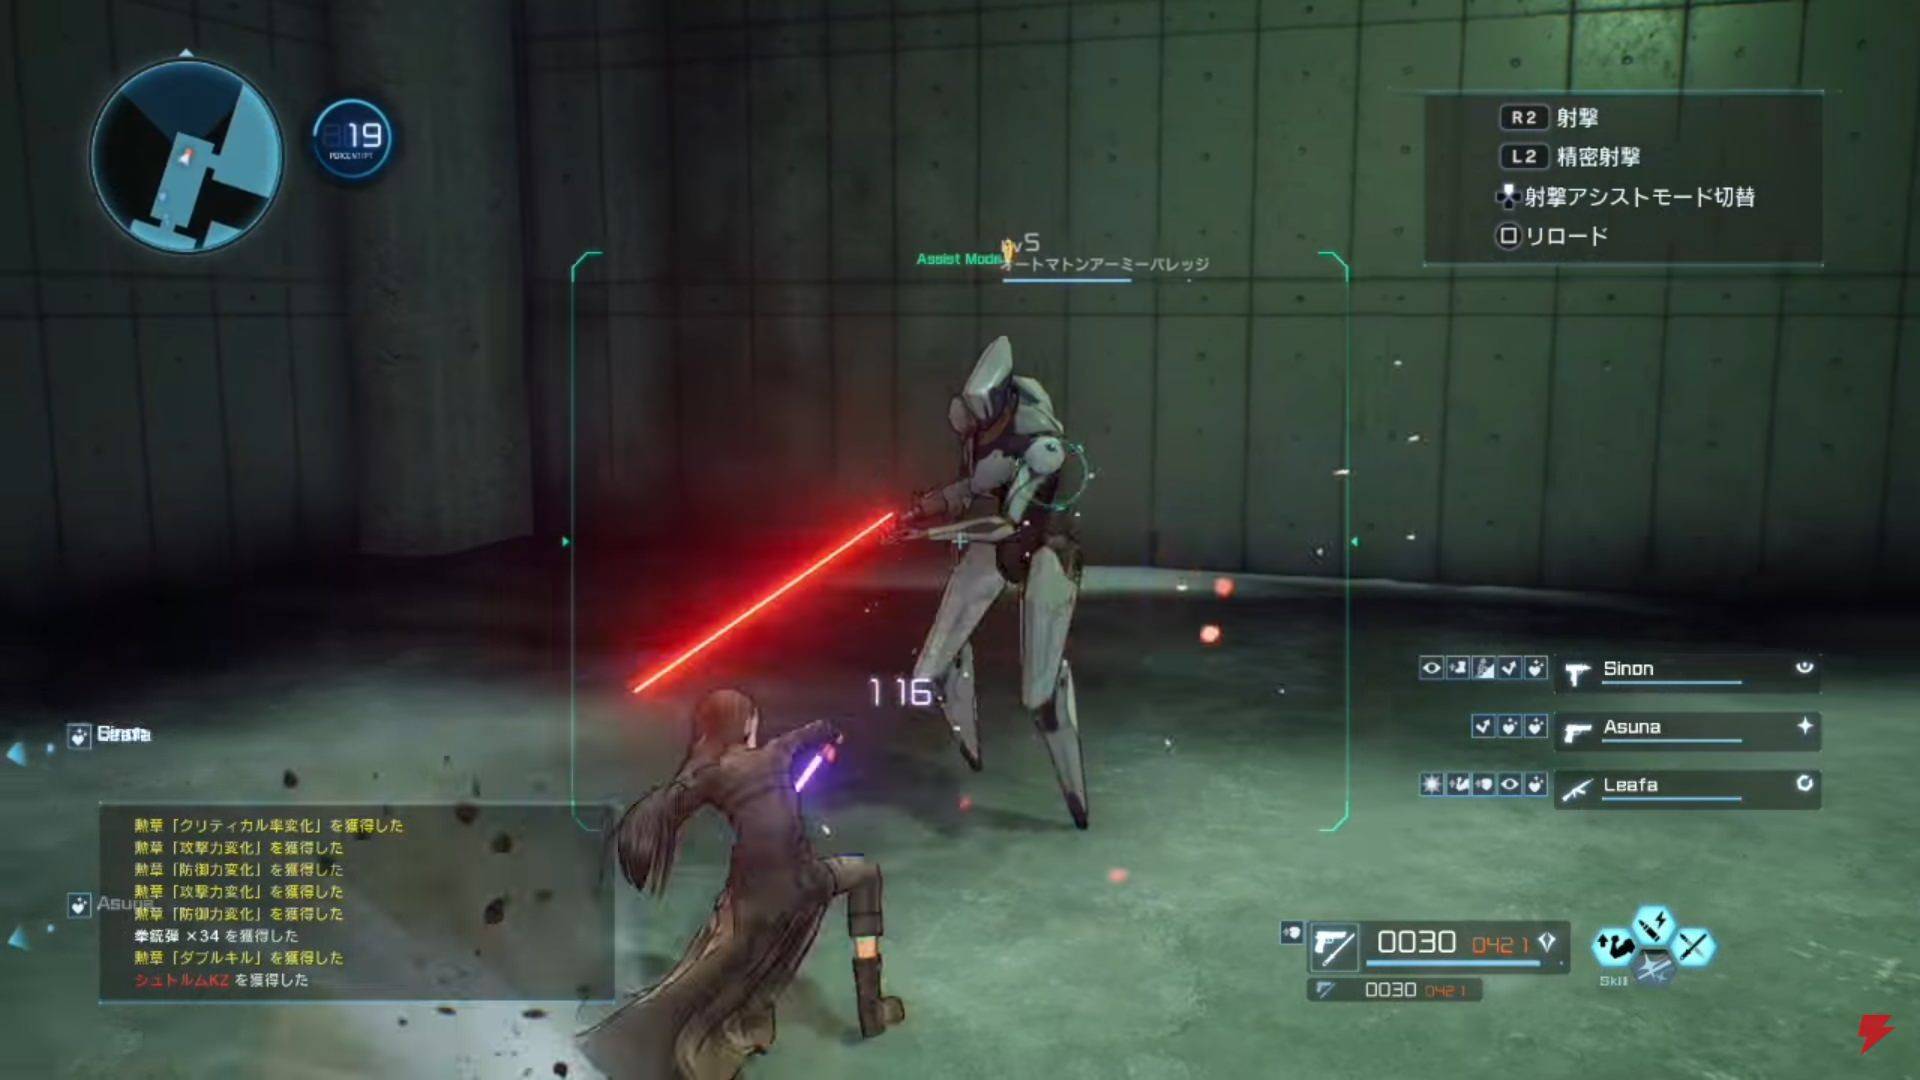 Sword Art Online: Fatal Bullet Xbox One and PC pre-order bonuses revealed!